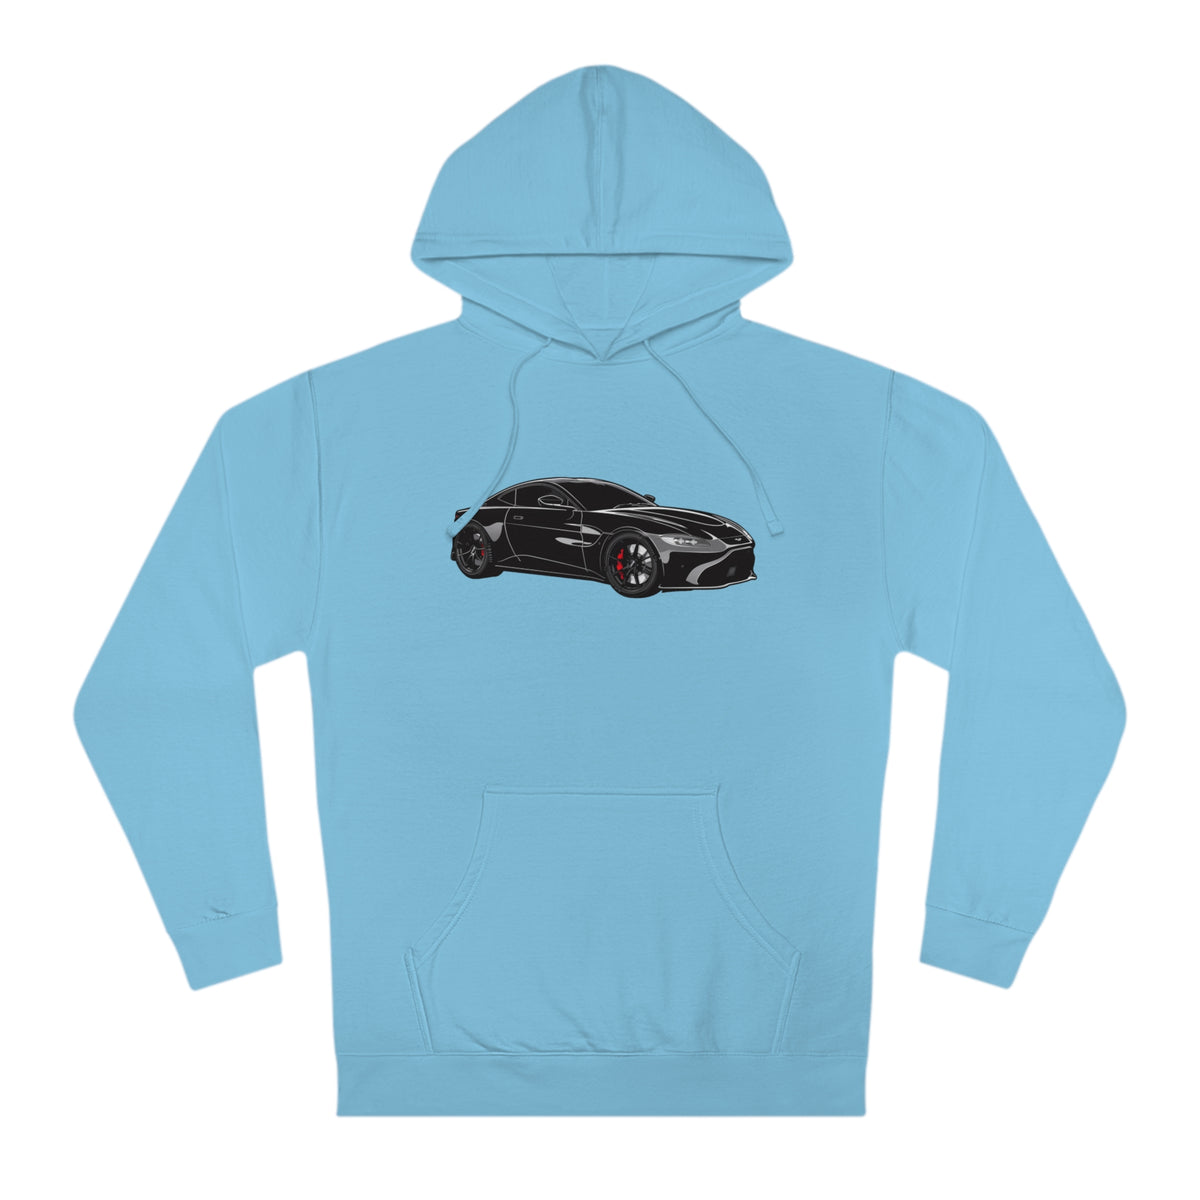 Midnight Drive Men's Hoodie with Aston Martin Graphic Hooded Sweatshirt